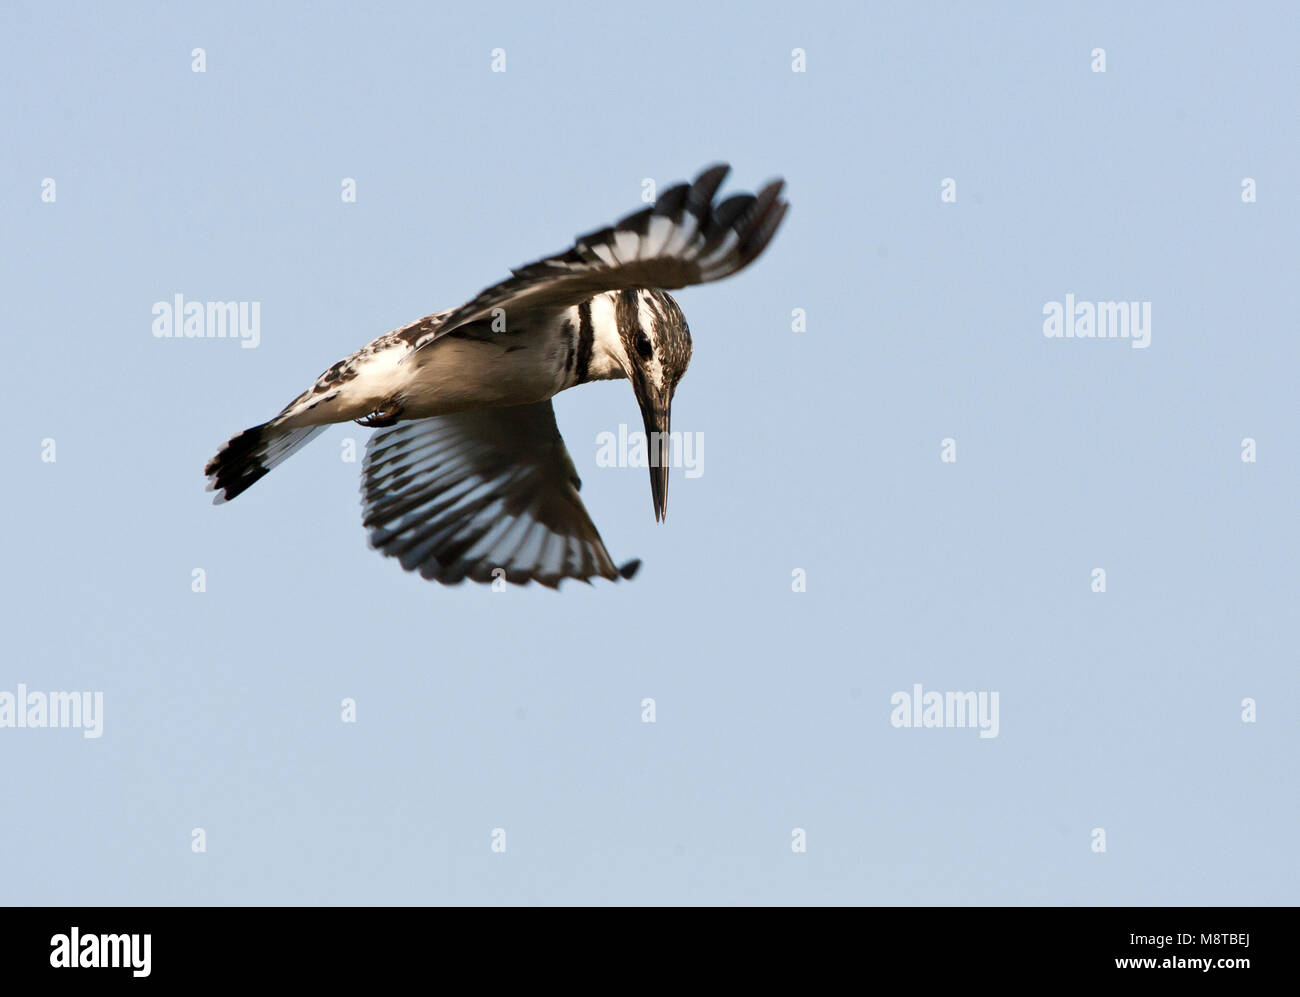 Bonte IJsvogel biddend boven Wasser op Zoek naar voedsel, Pied Kingfisher schweben über einen Pool in Suche von Essen Stockfoto